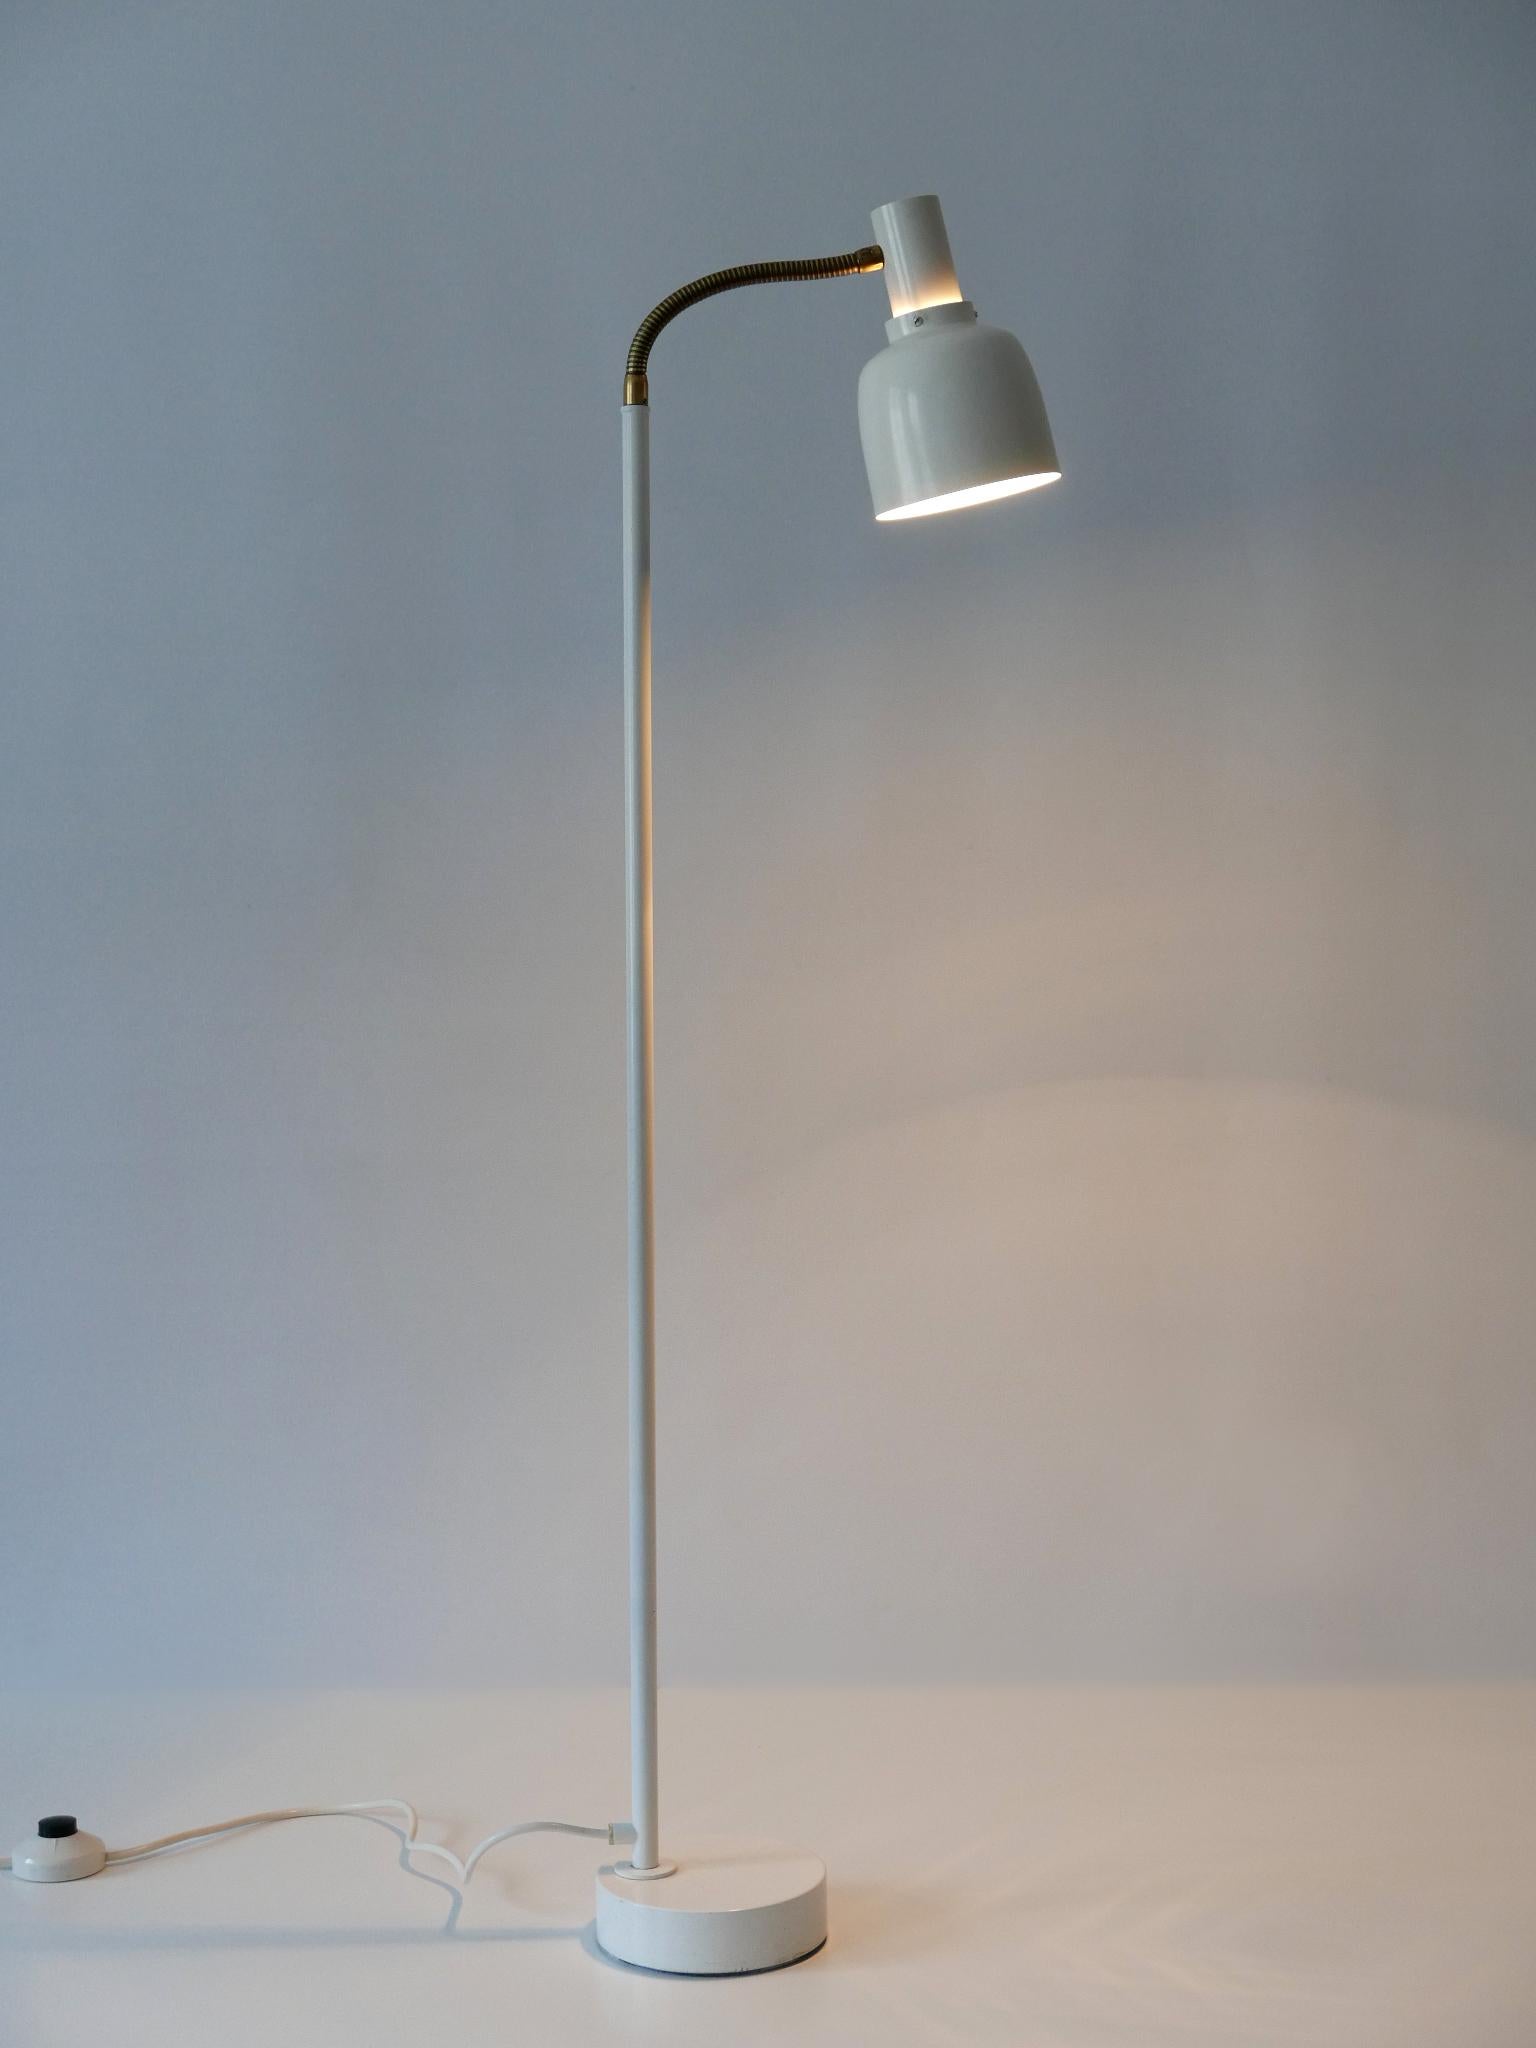 Rare Mid-Century Modern Floor Lamp or Reading Light by Hans-Agne Jakobsson 1960s For Sale 1